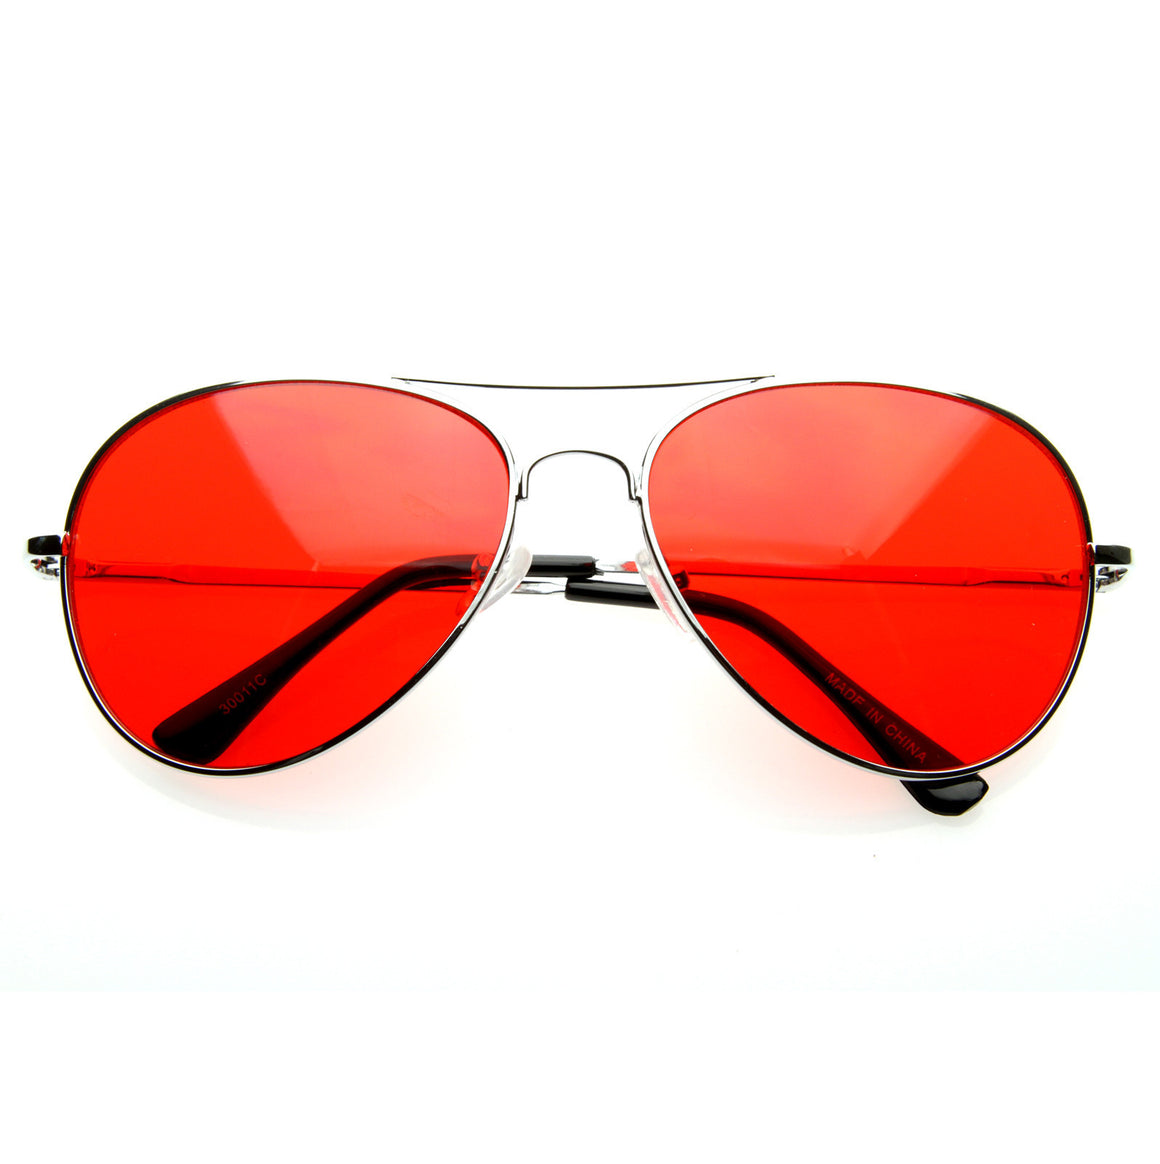 The Hangover Movie "Phil" Costume Bradley Cooper Aviator Sunglasses 8405